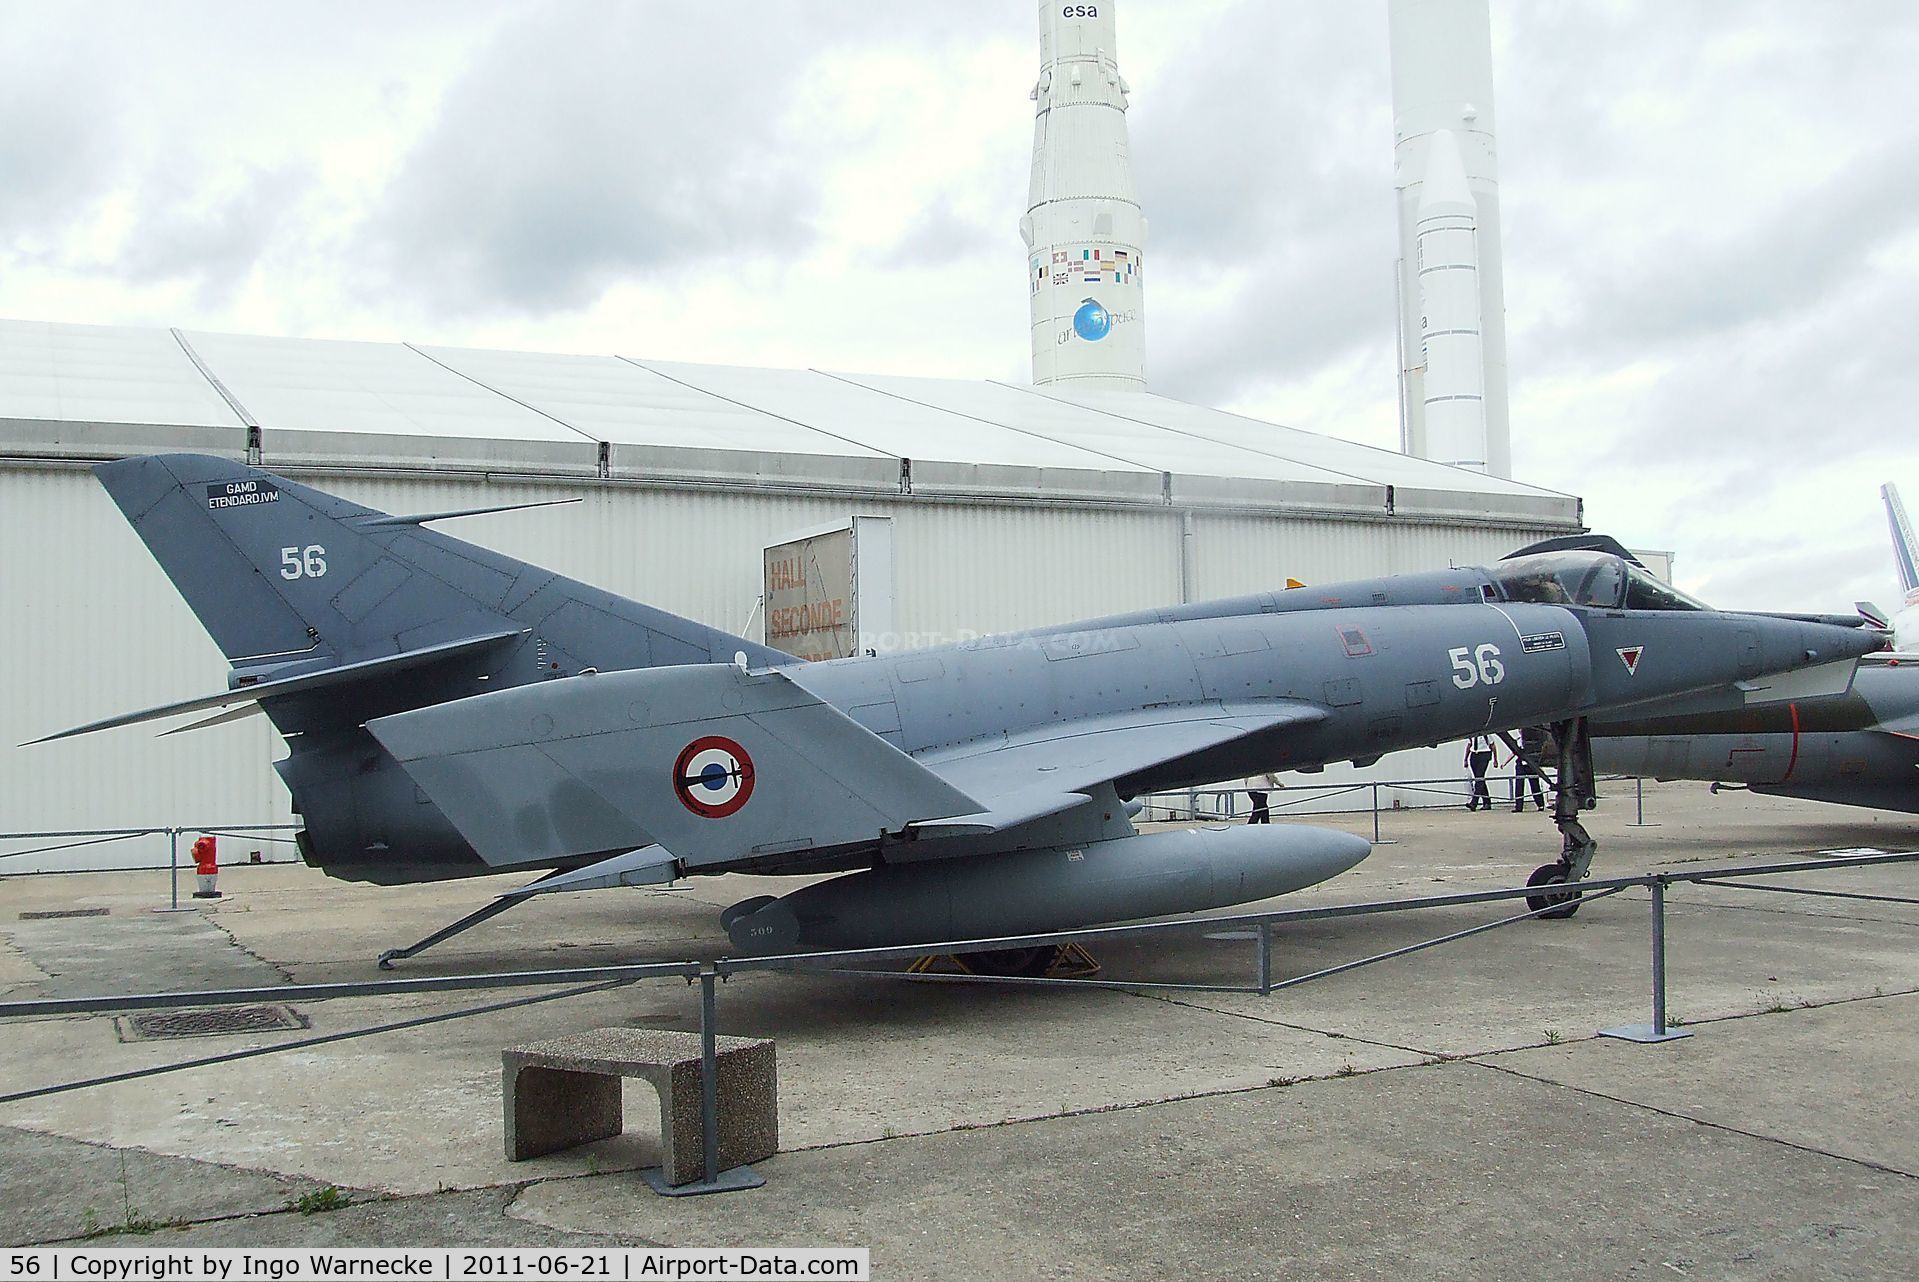 56, Dassault Etendard IV.M C/N 56, Dassault Etendard IV M at the Musee de l'Air, Paris/Le Bourget